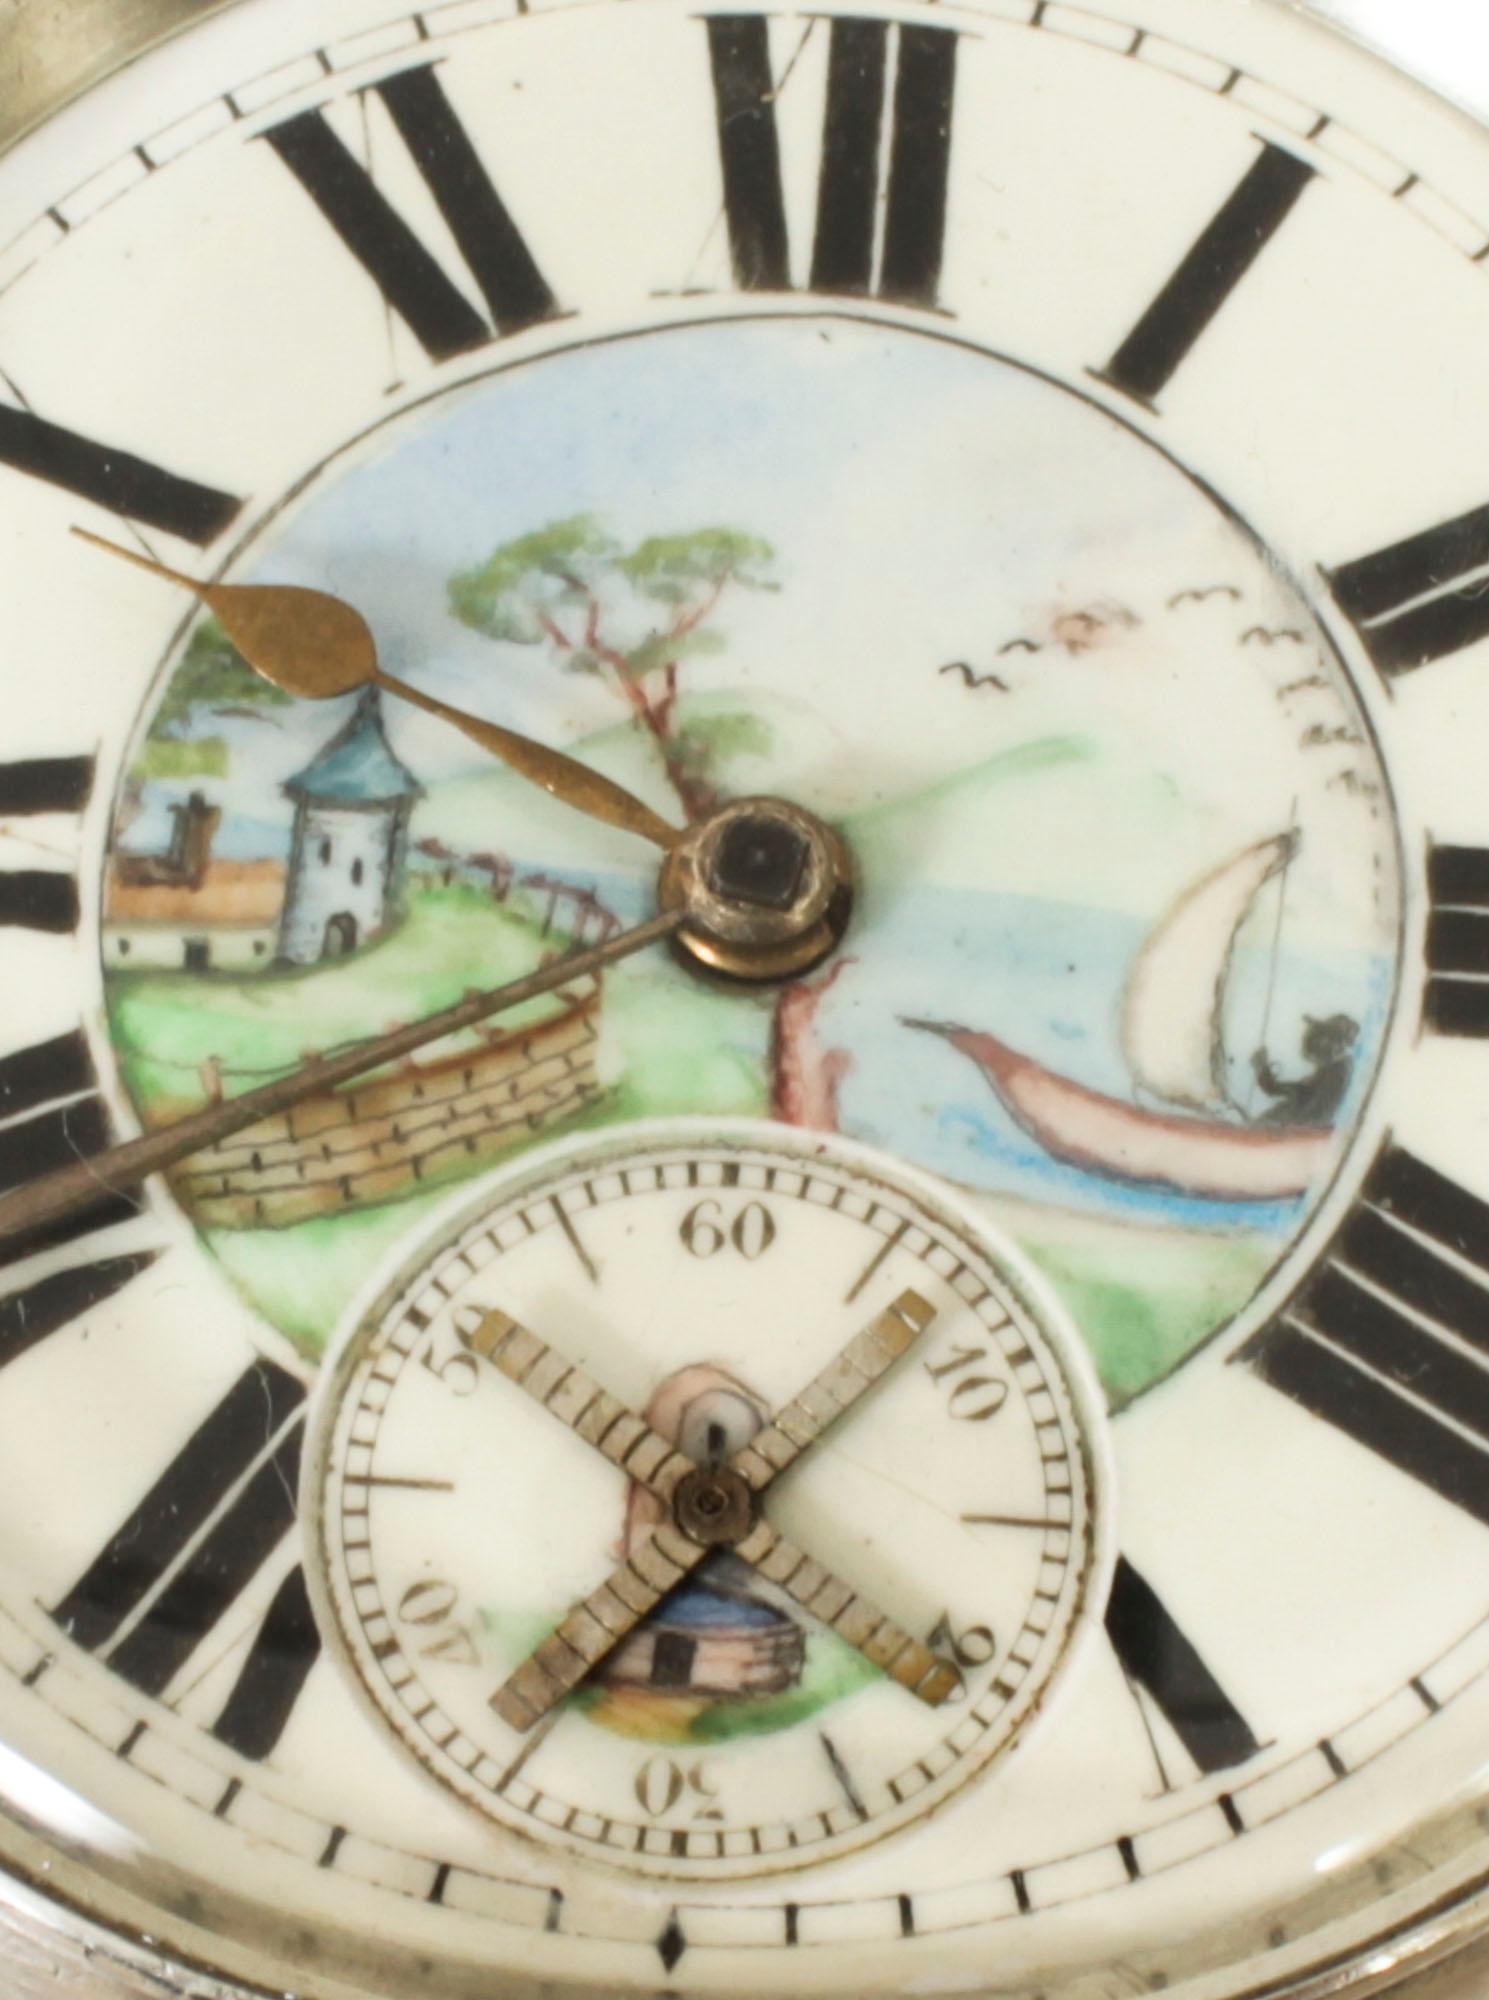 Antique Silver & Ebonised Watch Opera Walking Stick Thomas Peter Hewit 1